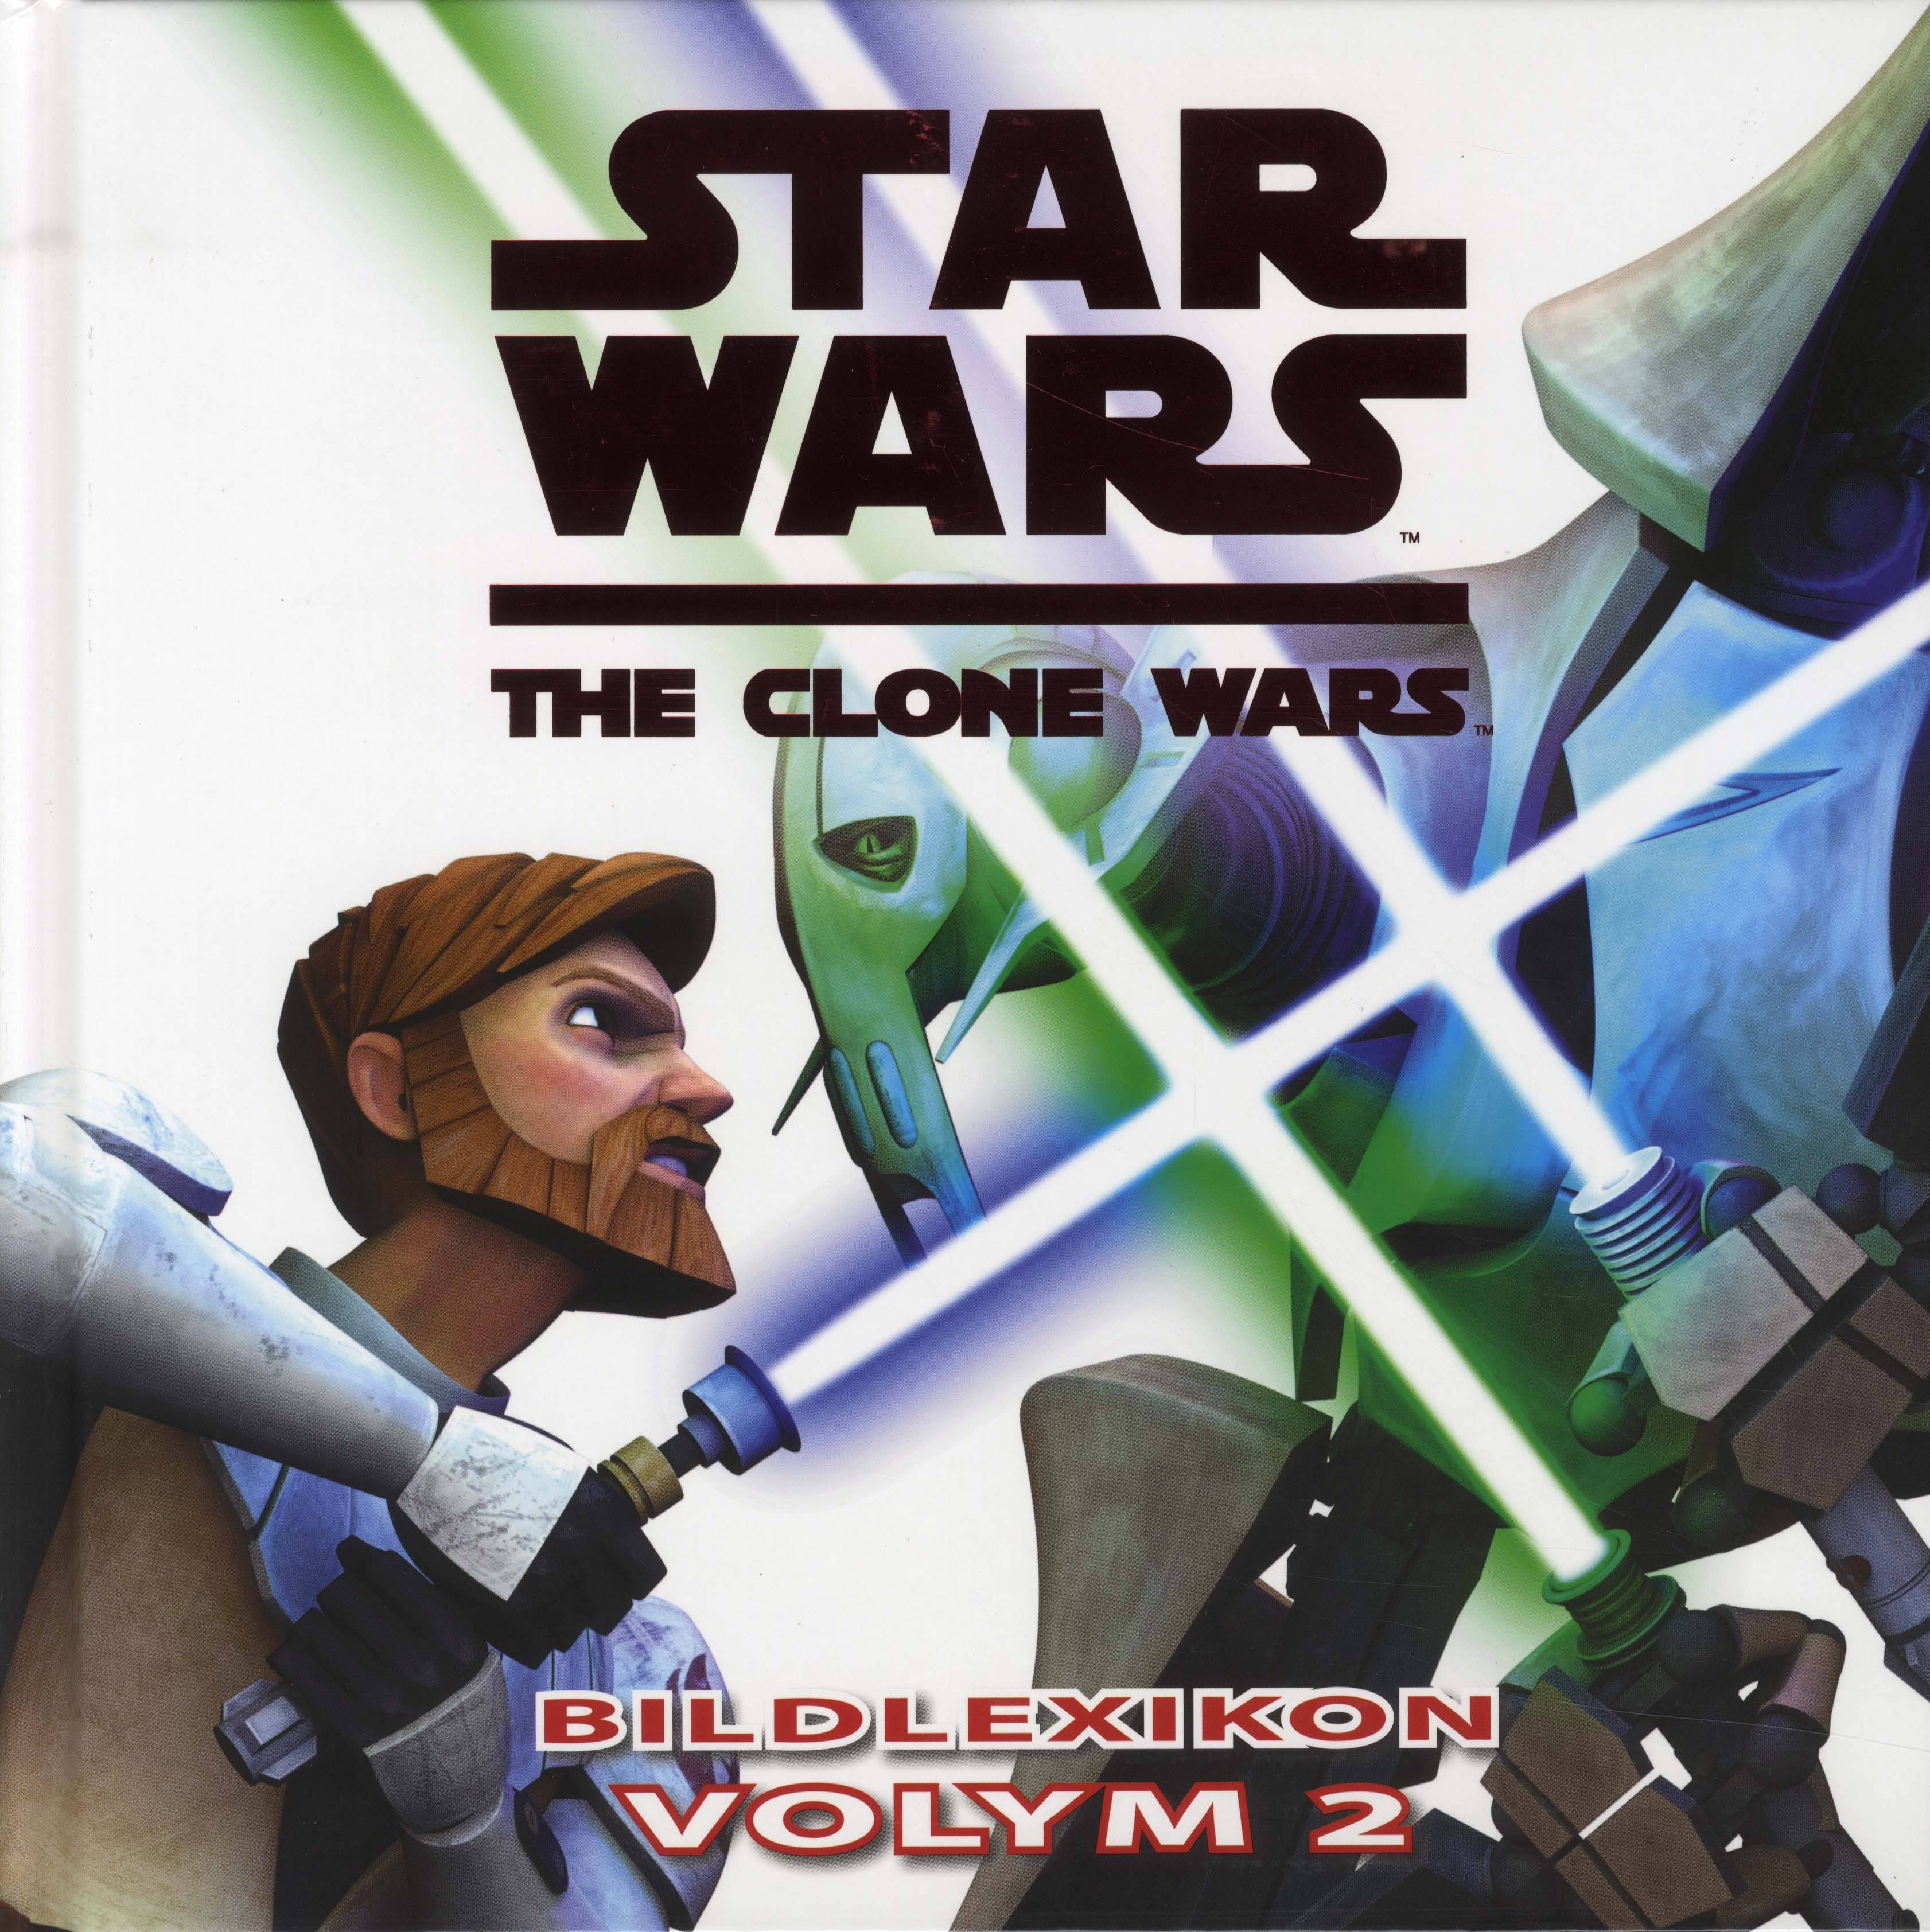 Star Wars. The Clone Wars : bildlexikon 2